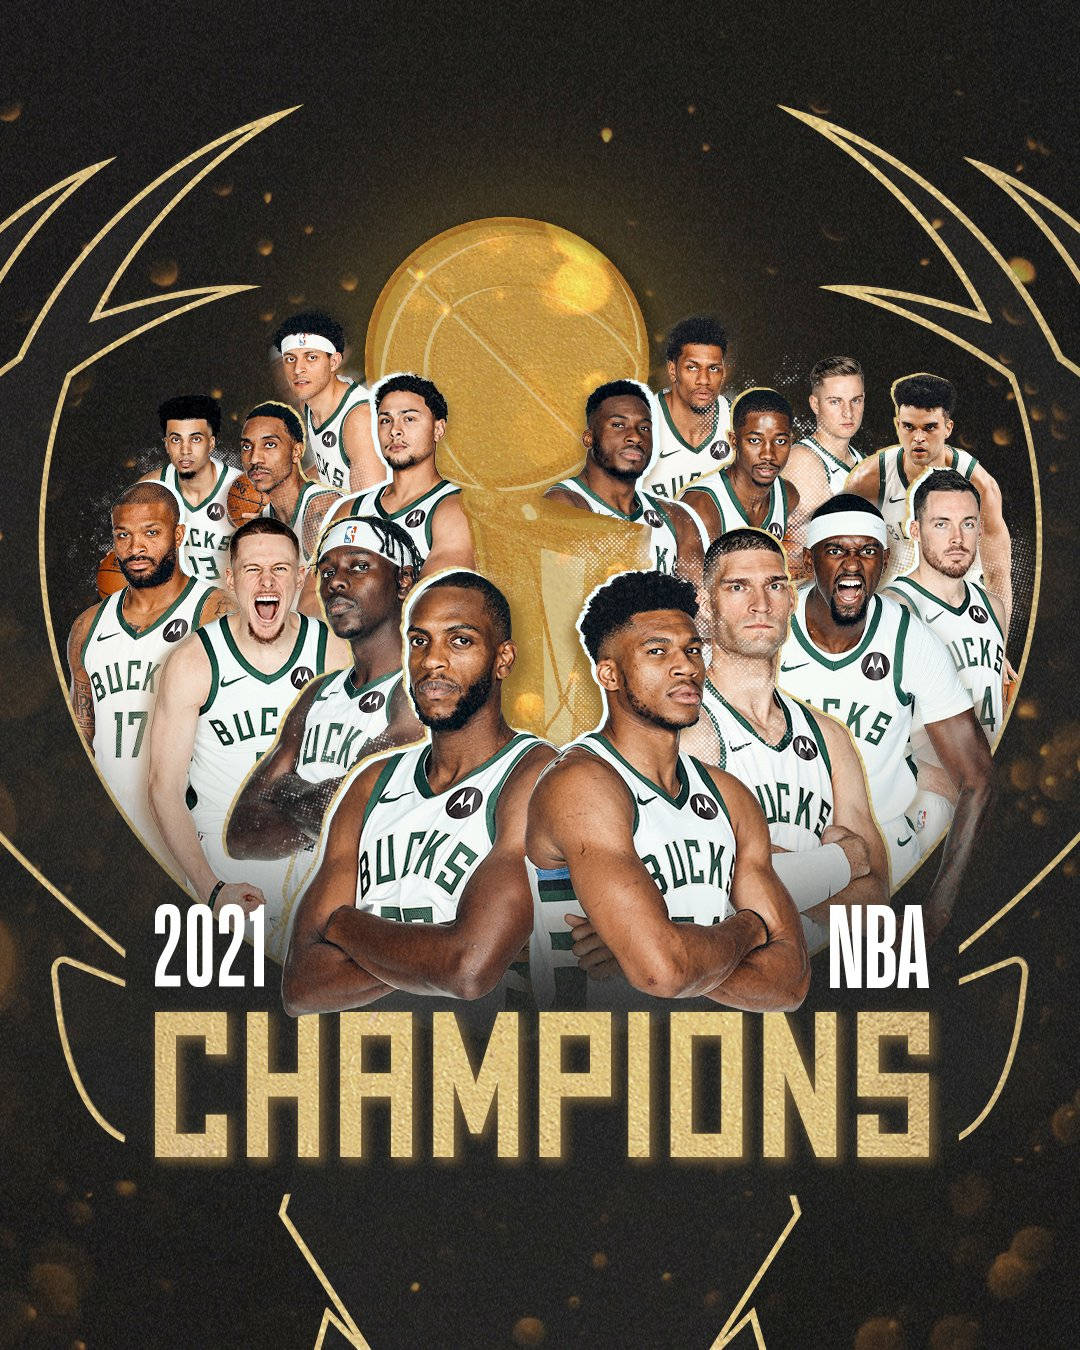 Sports Milwaukee Bucks HD Wallpaper